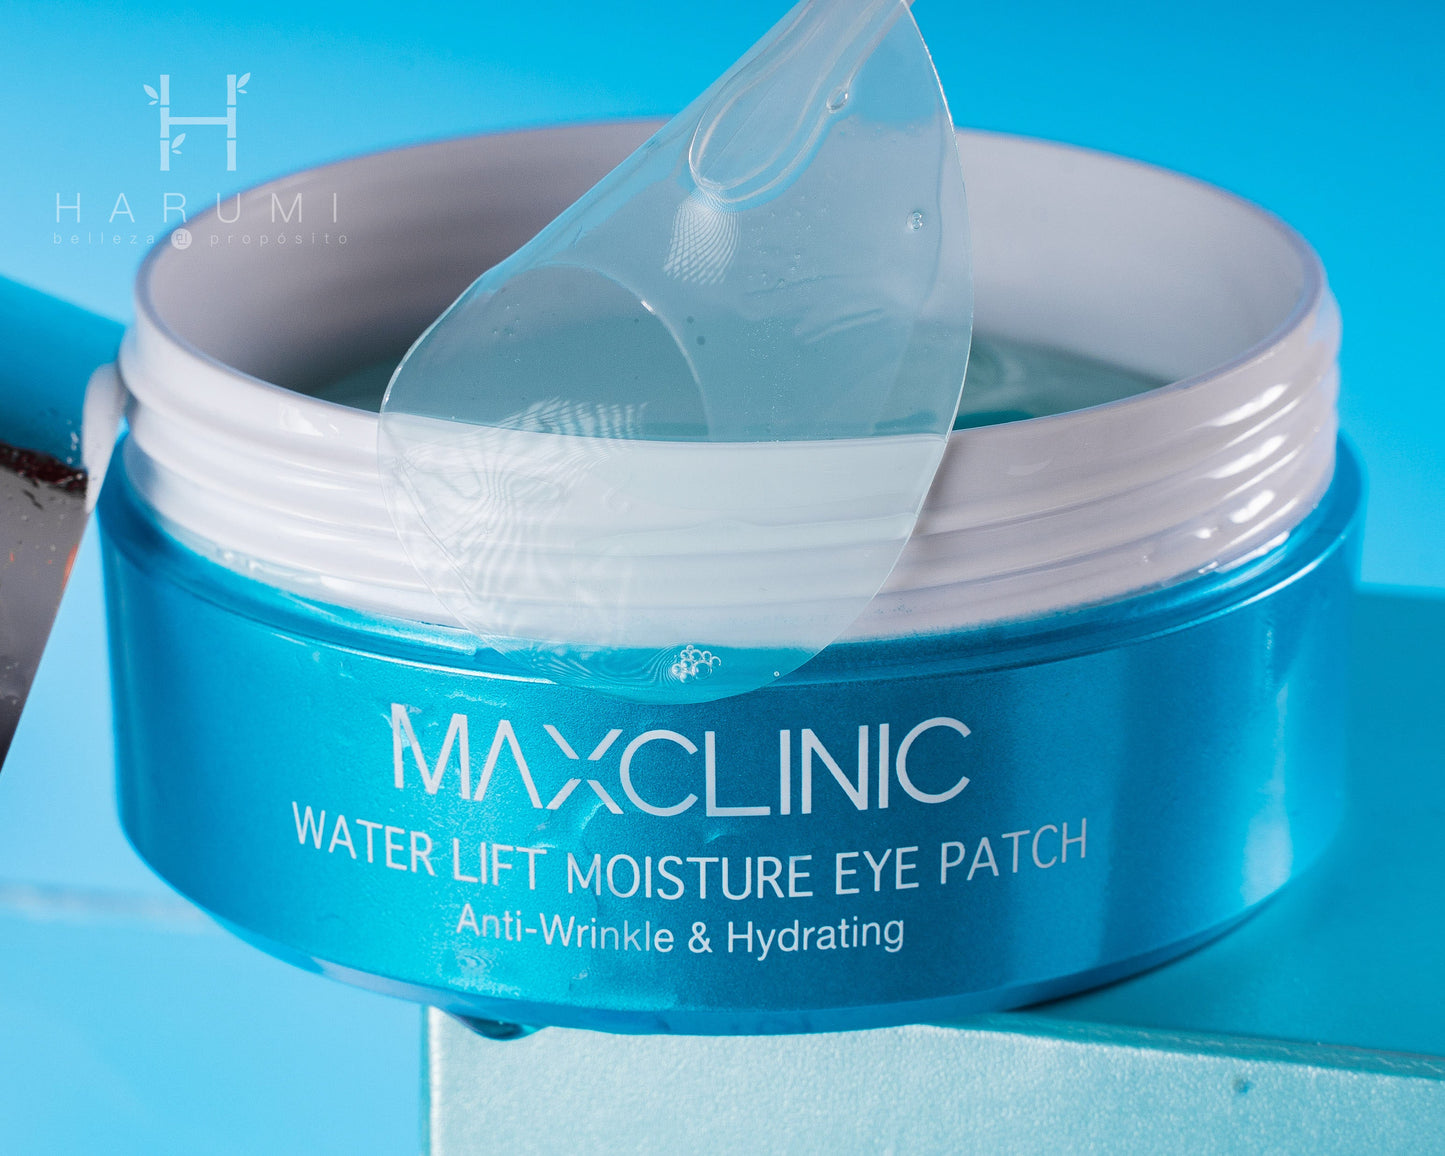 Maxclinic Water Lift Moisture Eye Patch Skincare maquillaje productos de belleza coreanos en Colombia kbeauty